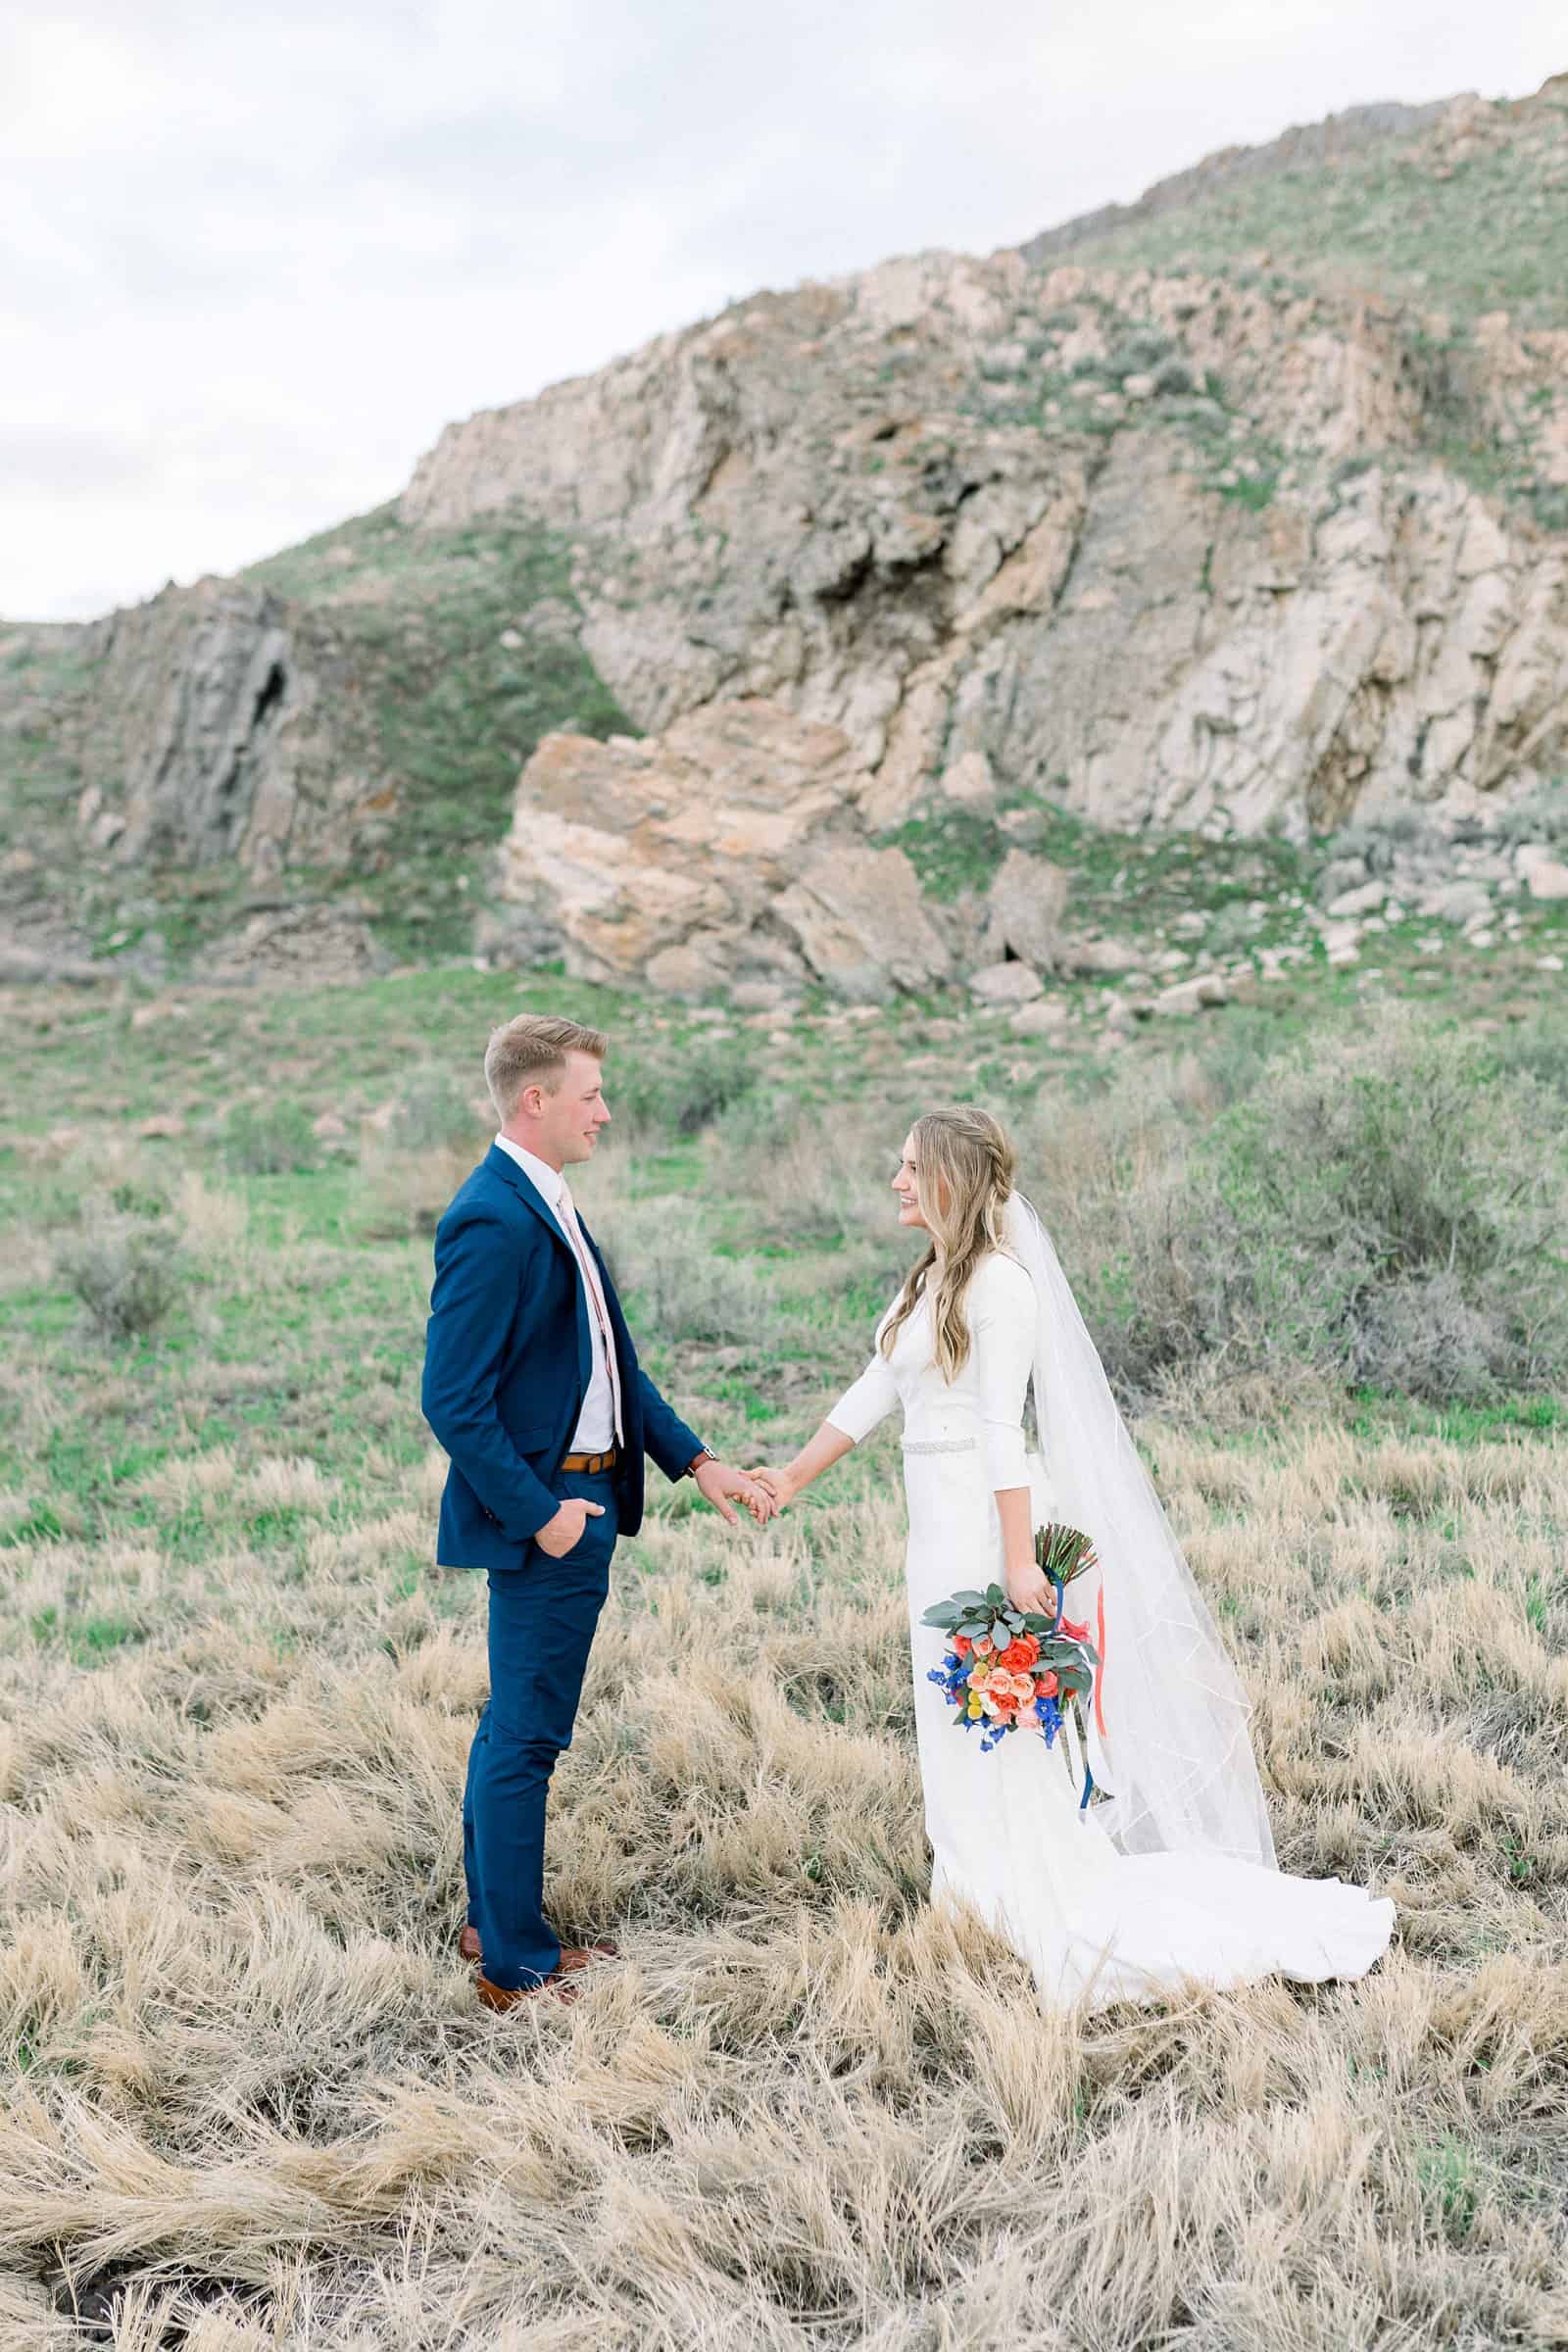 Ireland field, bride and groom, Utah mountains, nature wedding photography, spring wedding